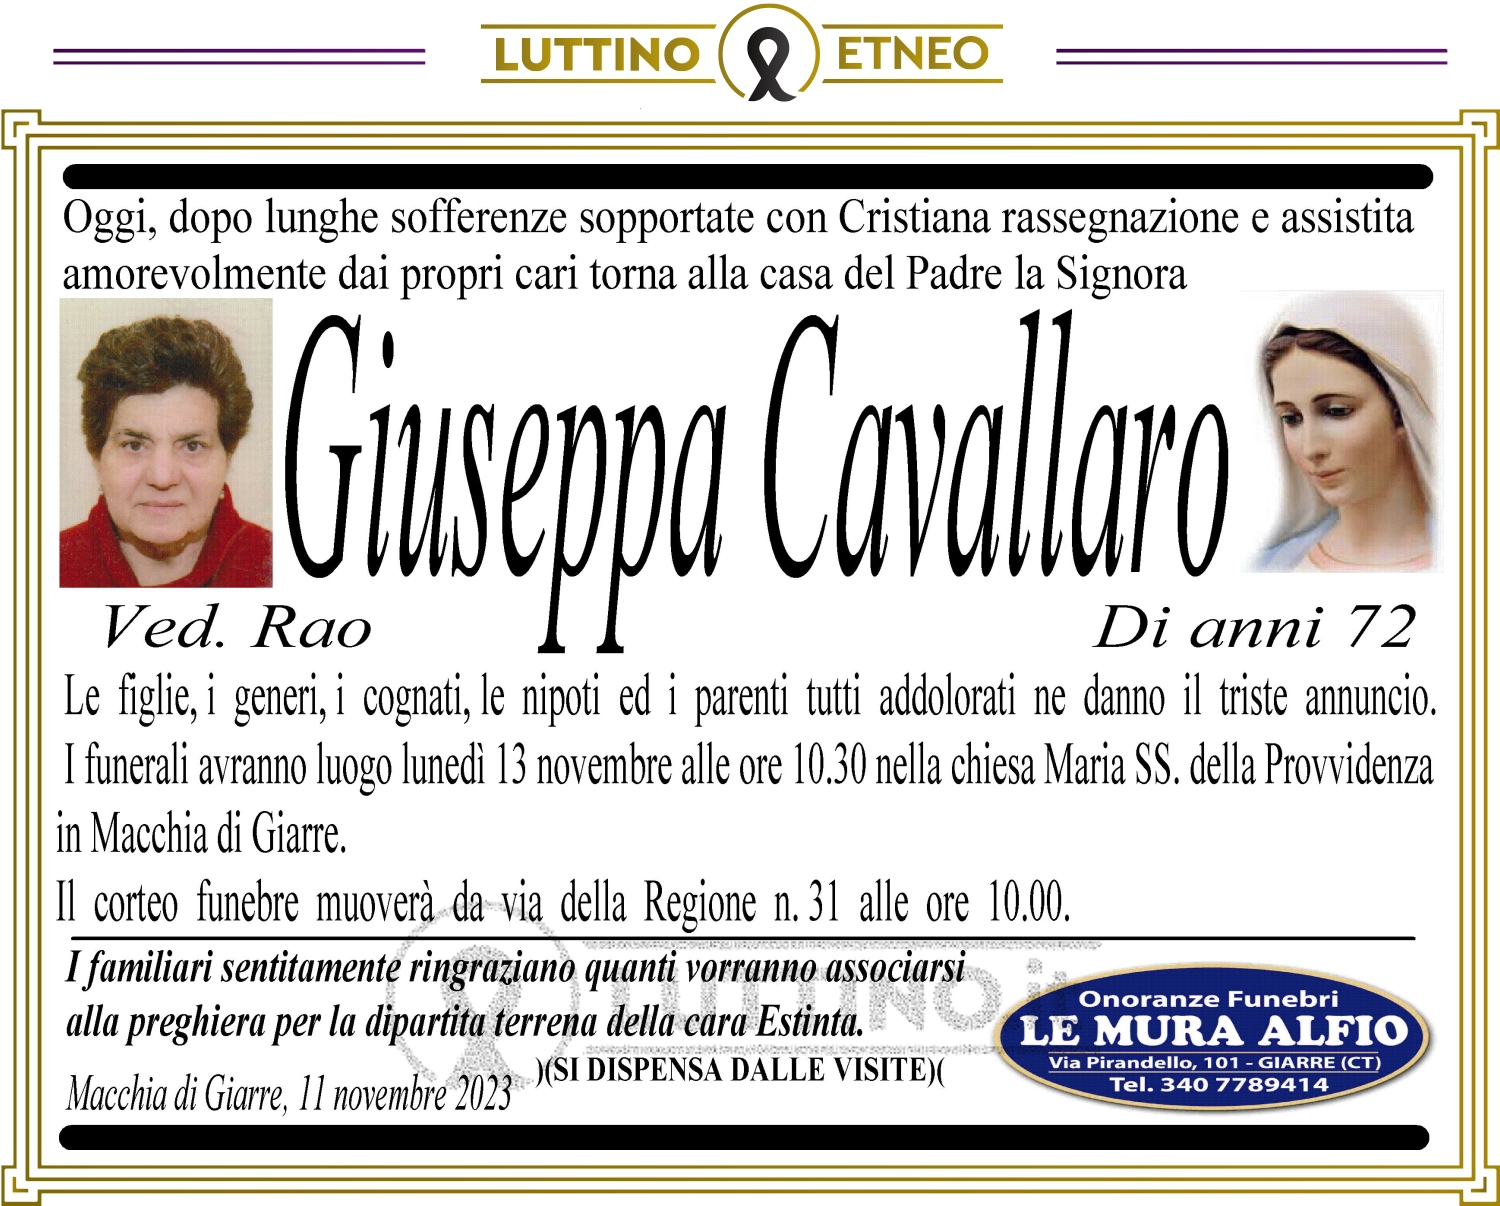 Giuseppa Cavallaro